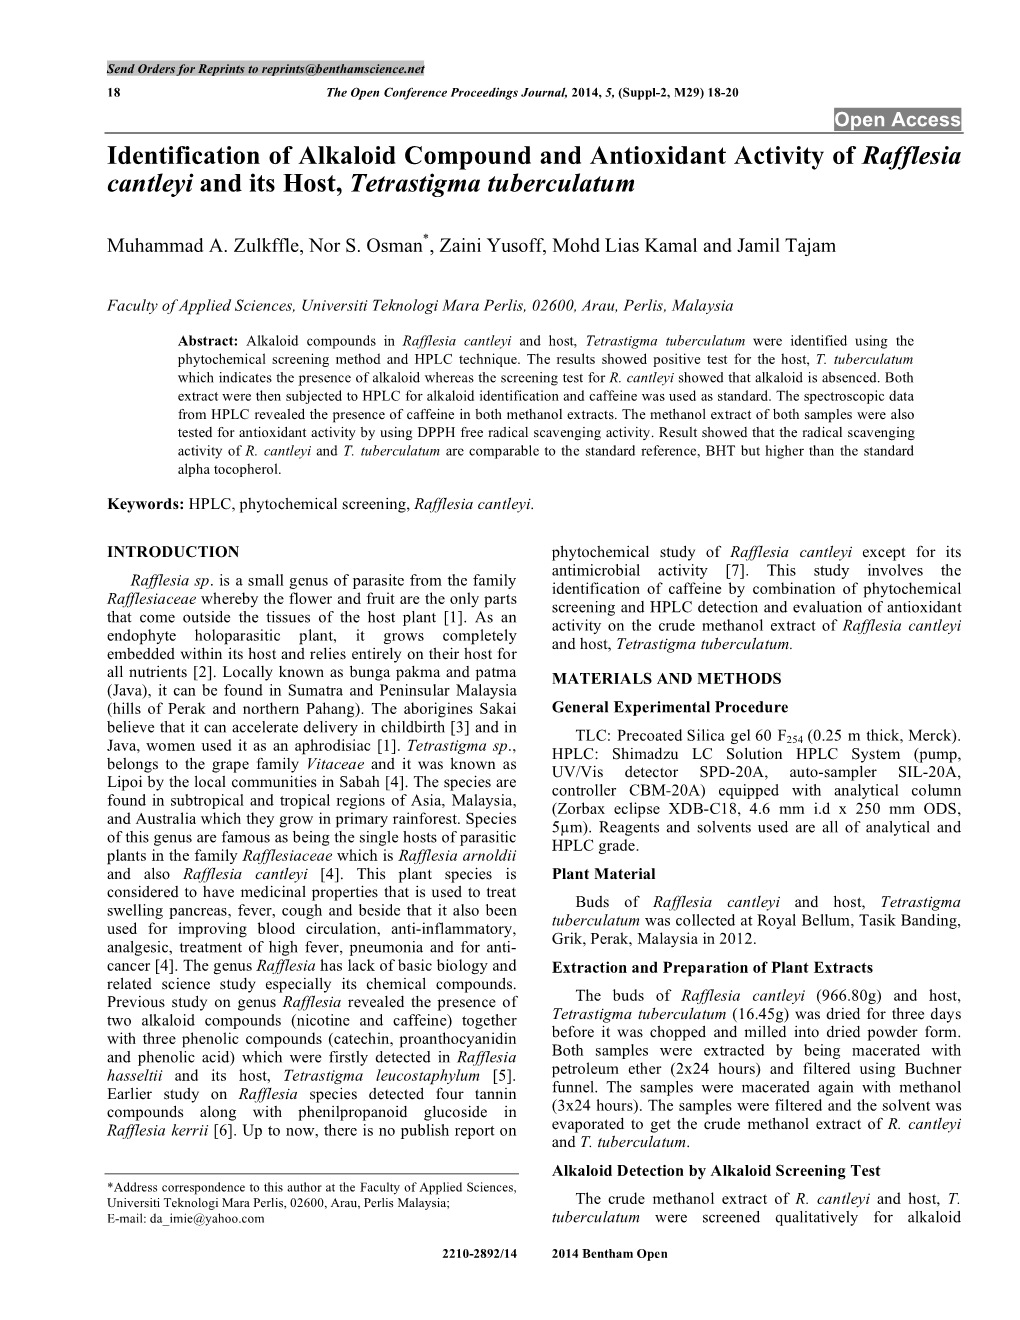 Identification of Alkaloid Compound and Antioxidant Activity of Rafflesia Cantleyi and Its Host, Tetrastigma Tuberculatum